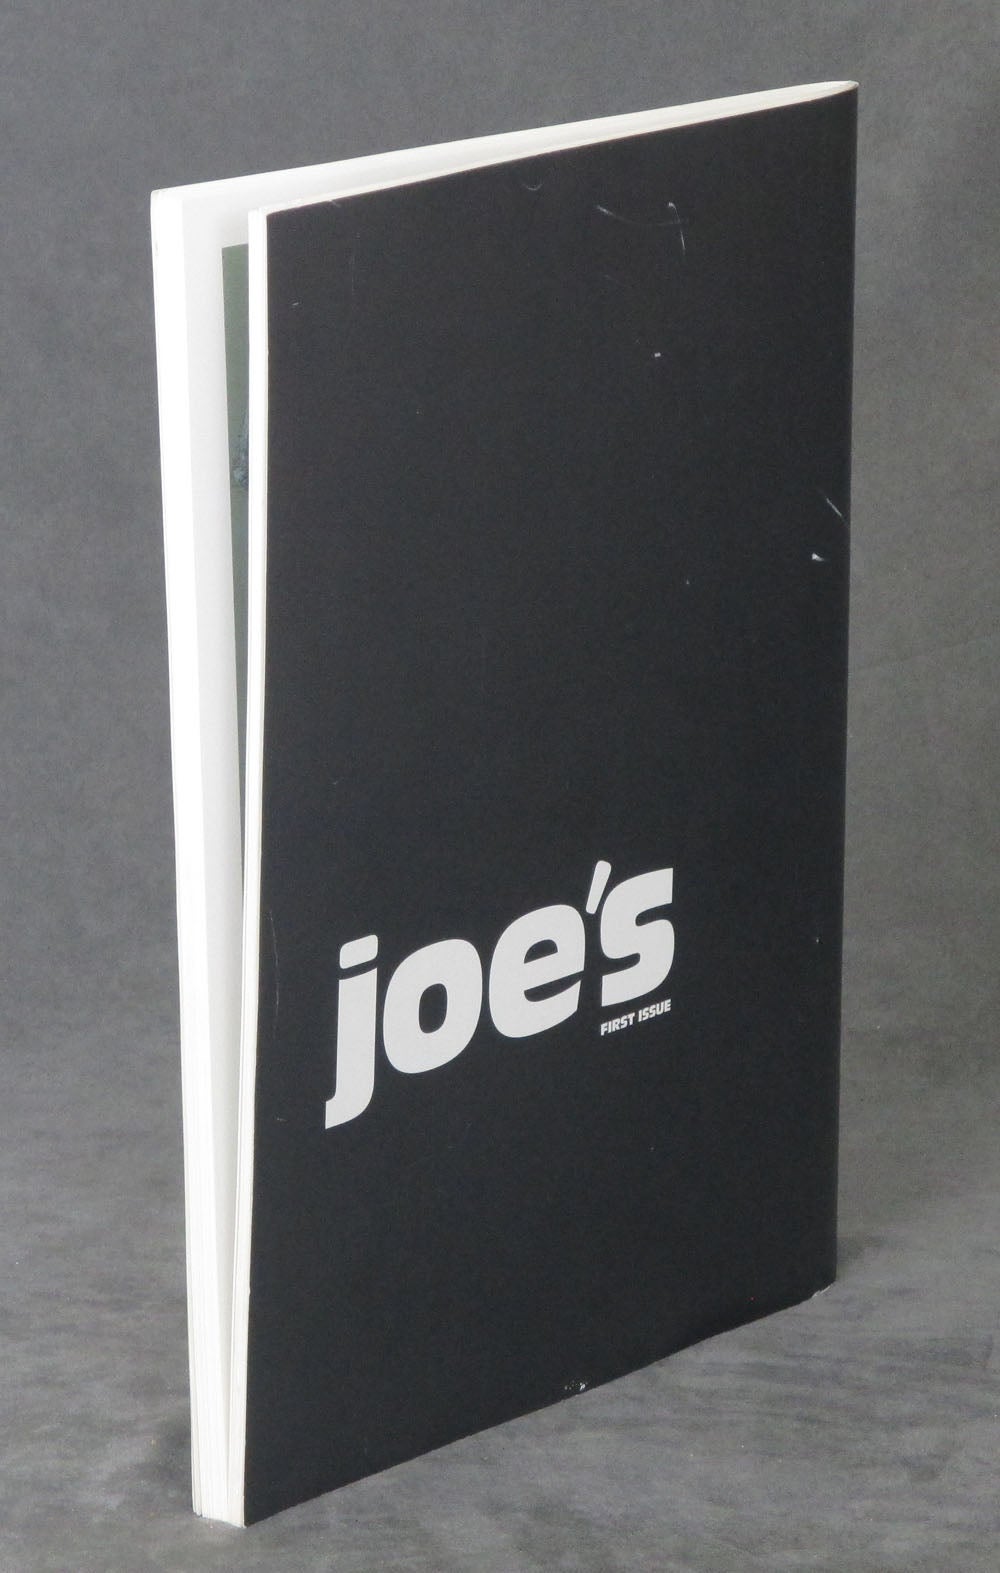 Joe's, first issue by Joe McKenna, Paul Cadmus Kurt Markus, Rene Ricard on  Common Crow Books